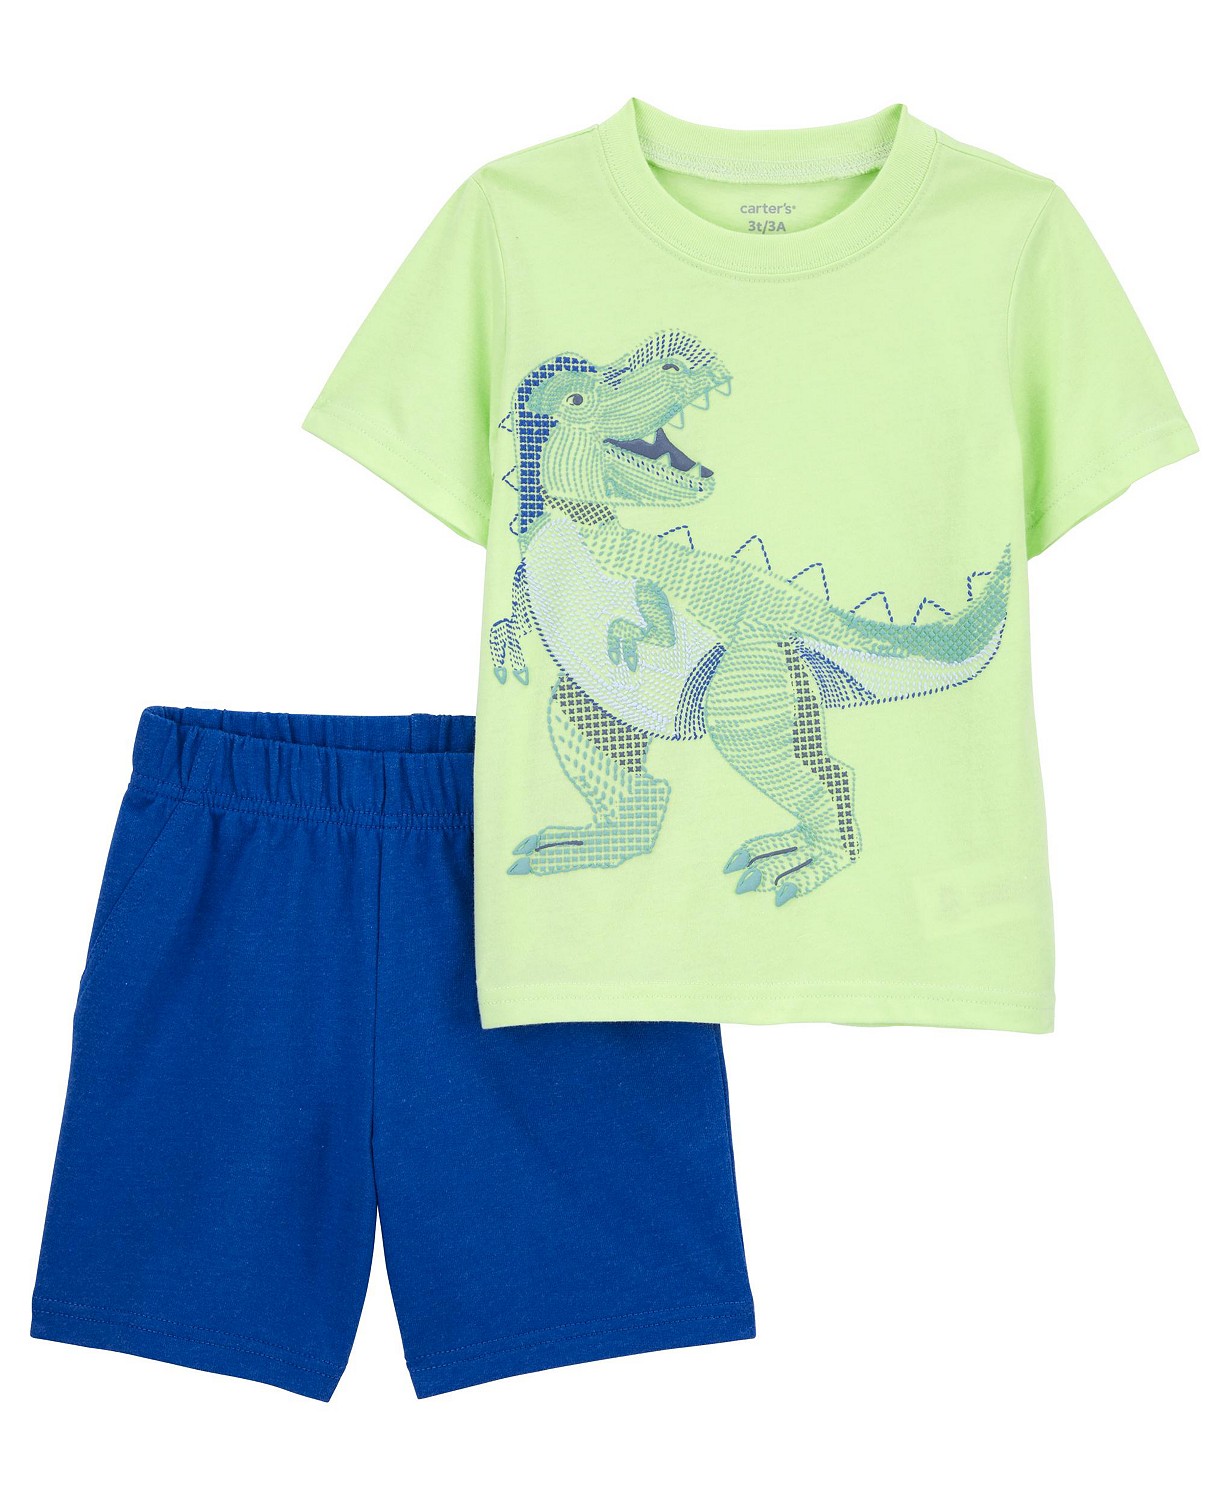 Baby Boys Dinosaur T-shirt and Shorts 2 Piece Set